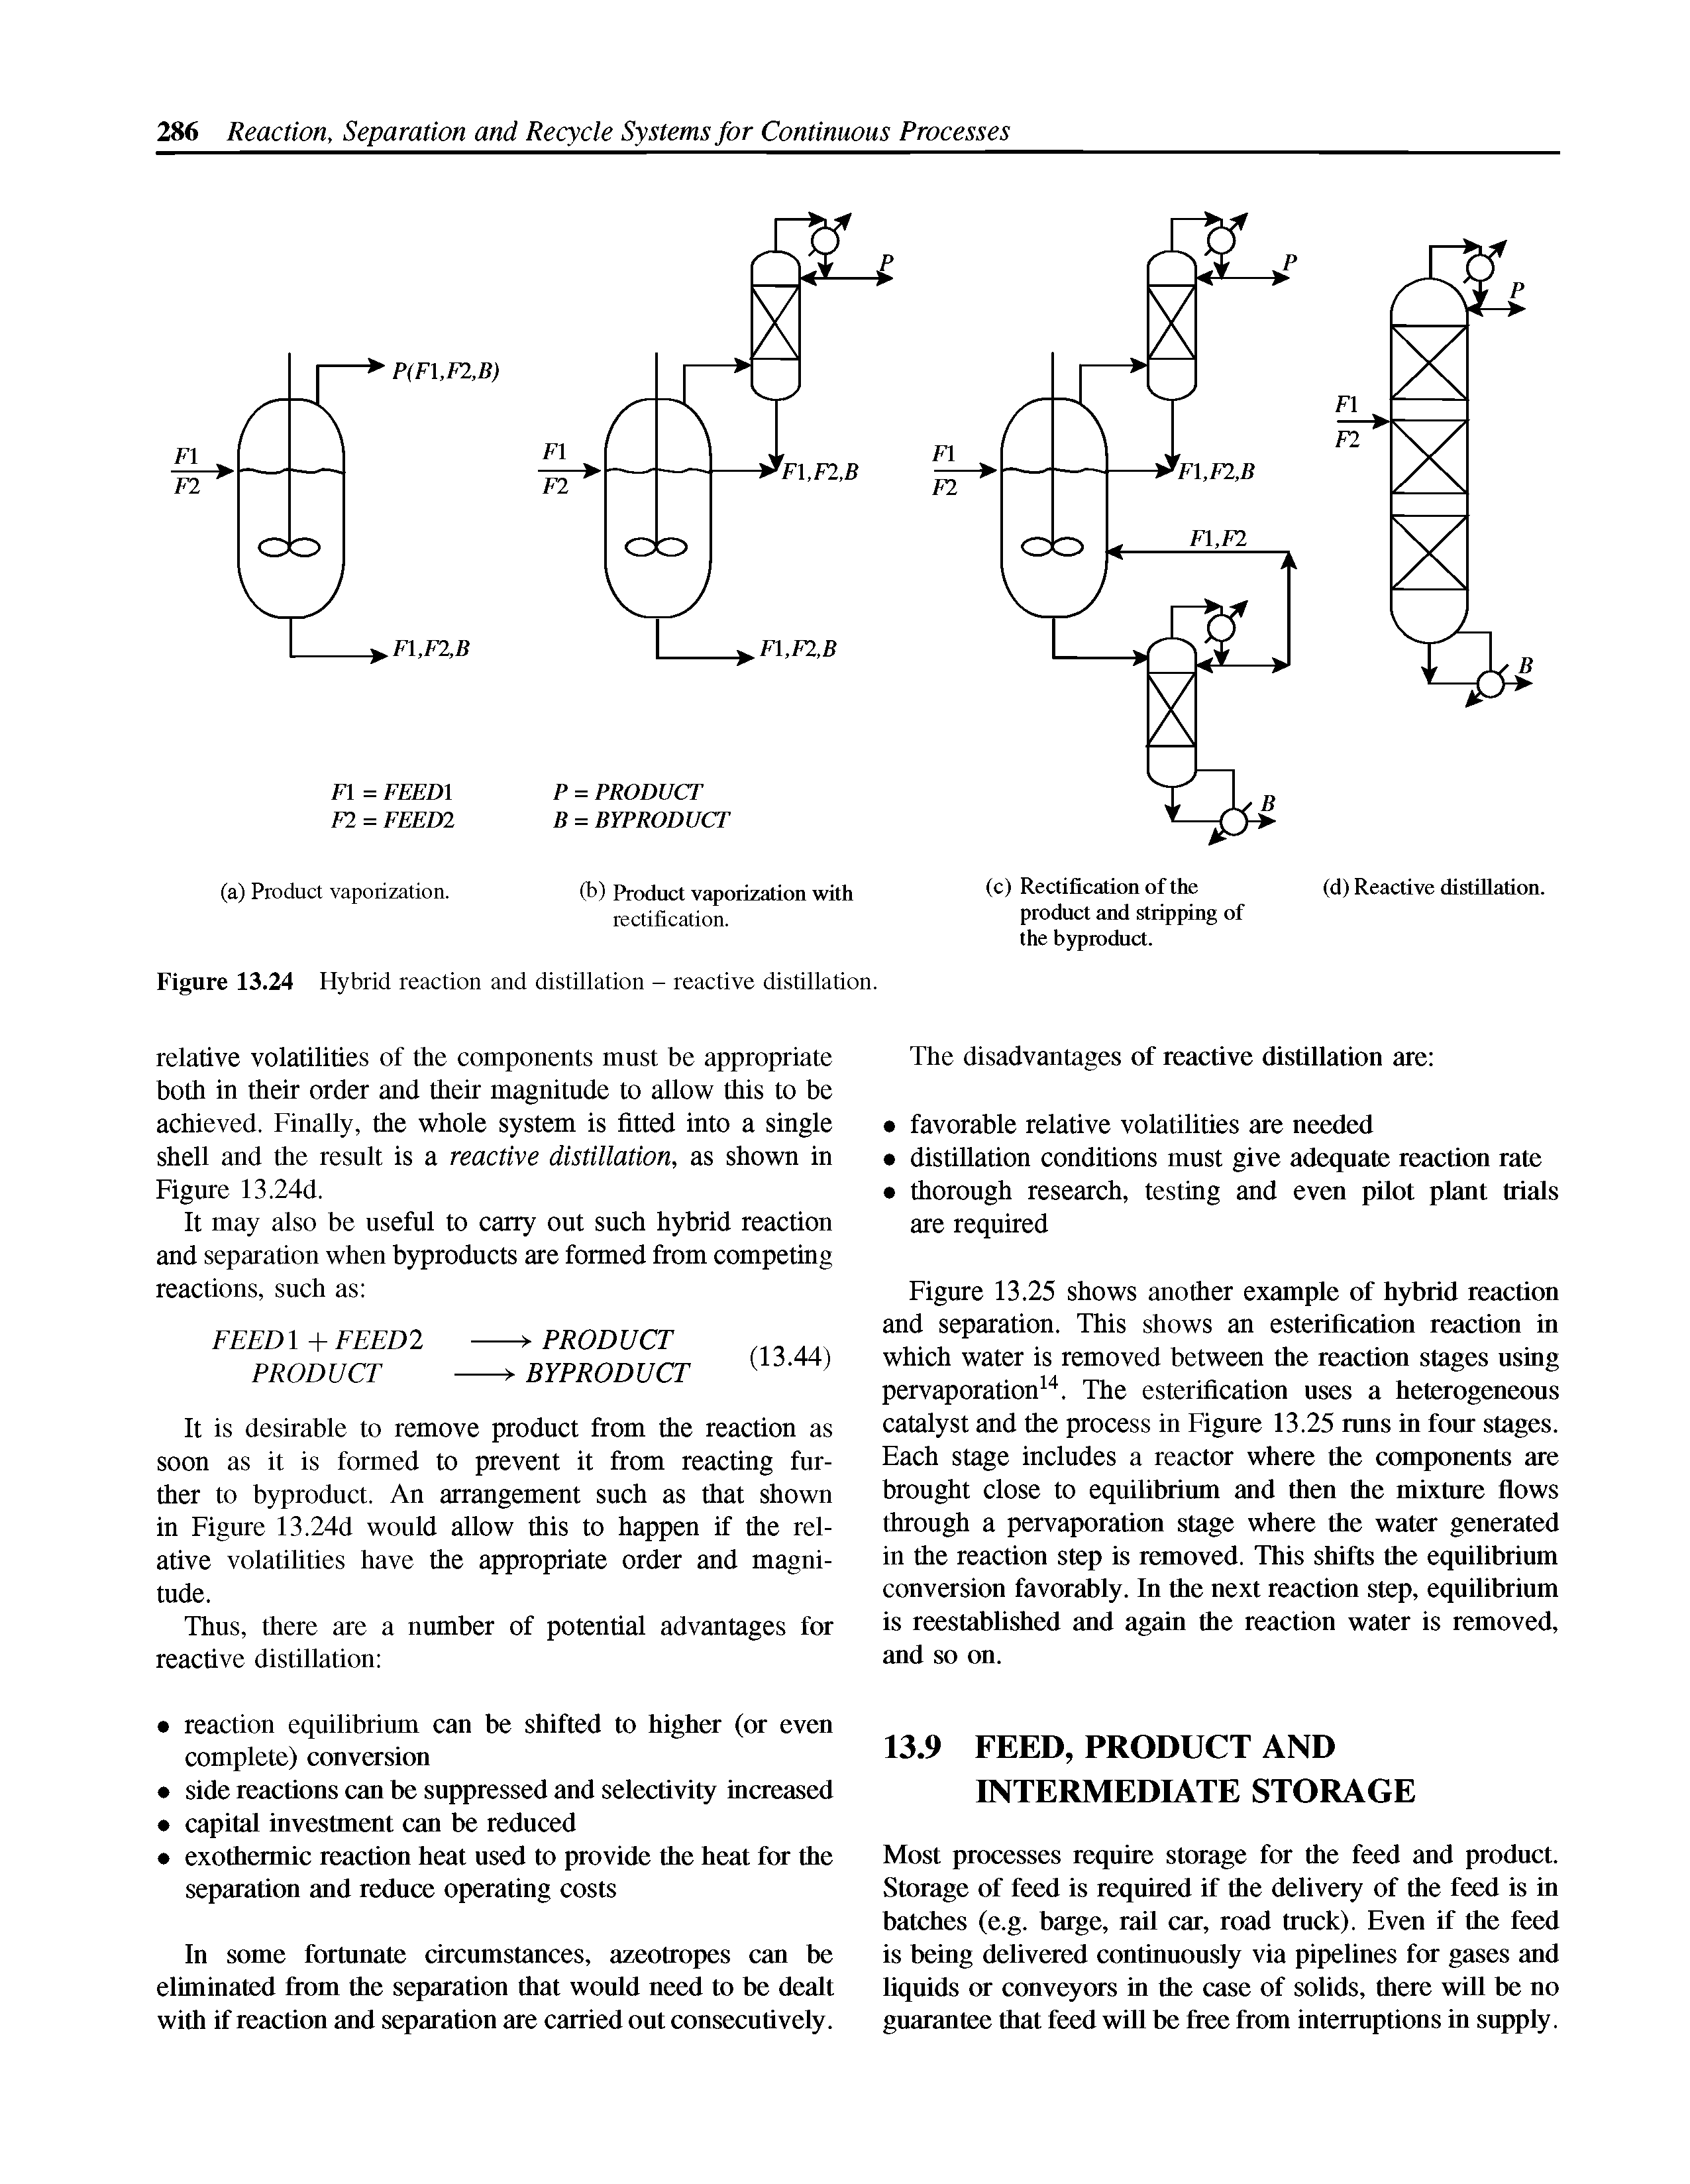 Figure 13.24 Hybrid reaction and distillation - reactive distillation.